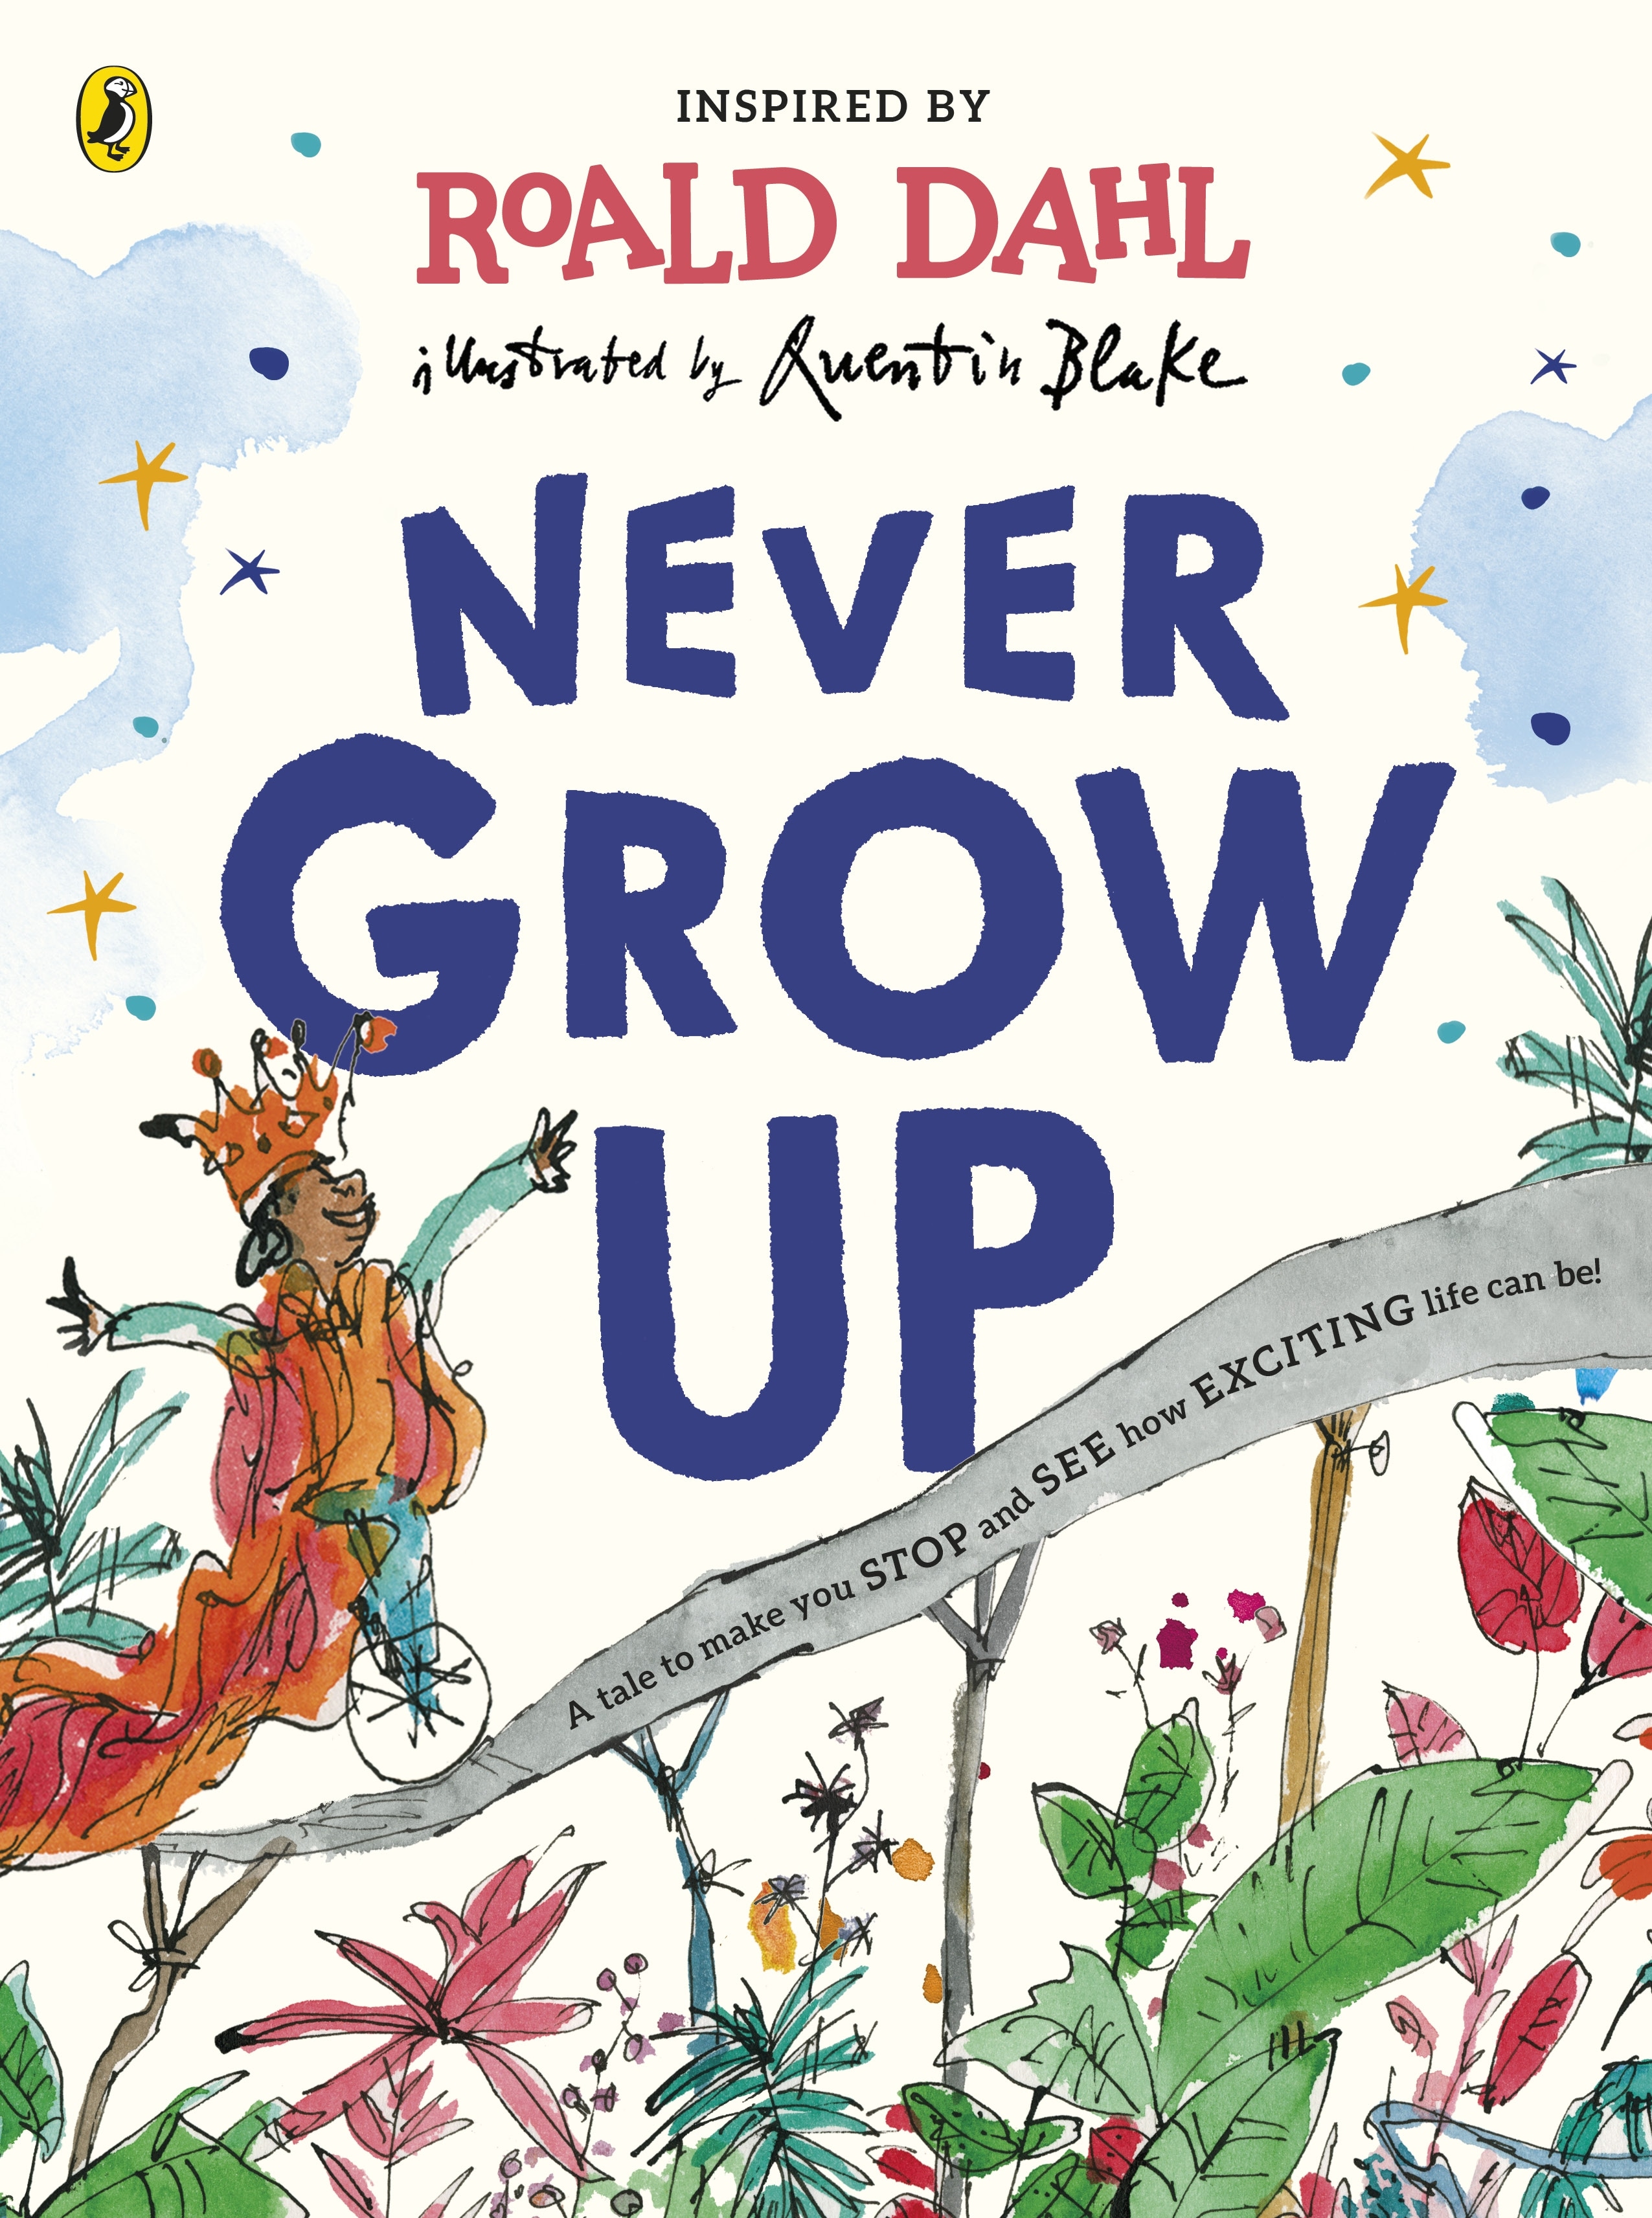 Book “Never Grow Up” by Roald Dahl — June 9, 2022